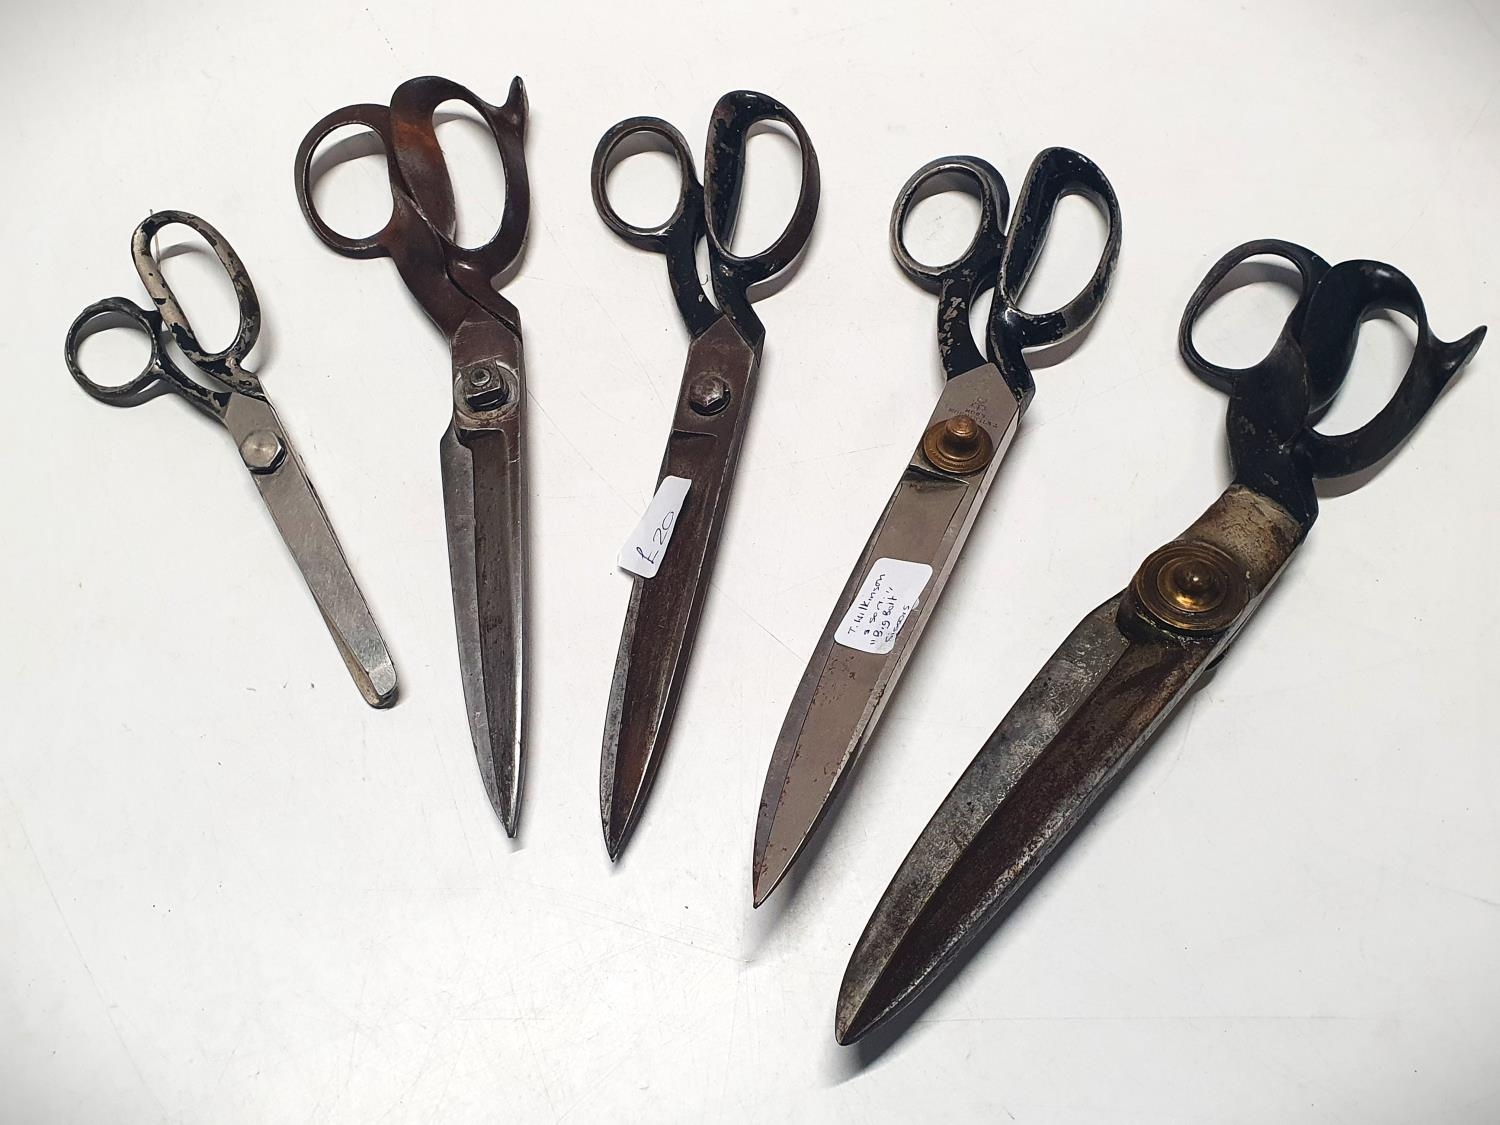 A selection seamstress scissors including Wilkinson and son "Big Bolt" Scissors